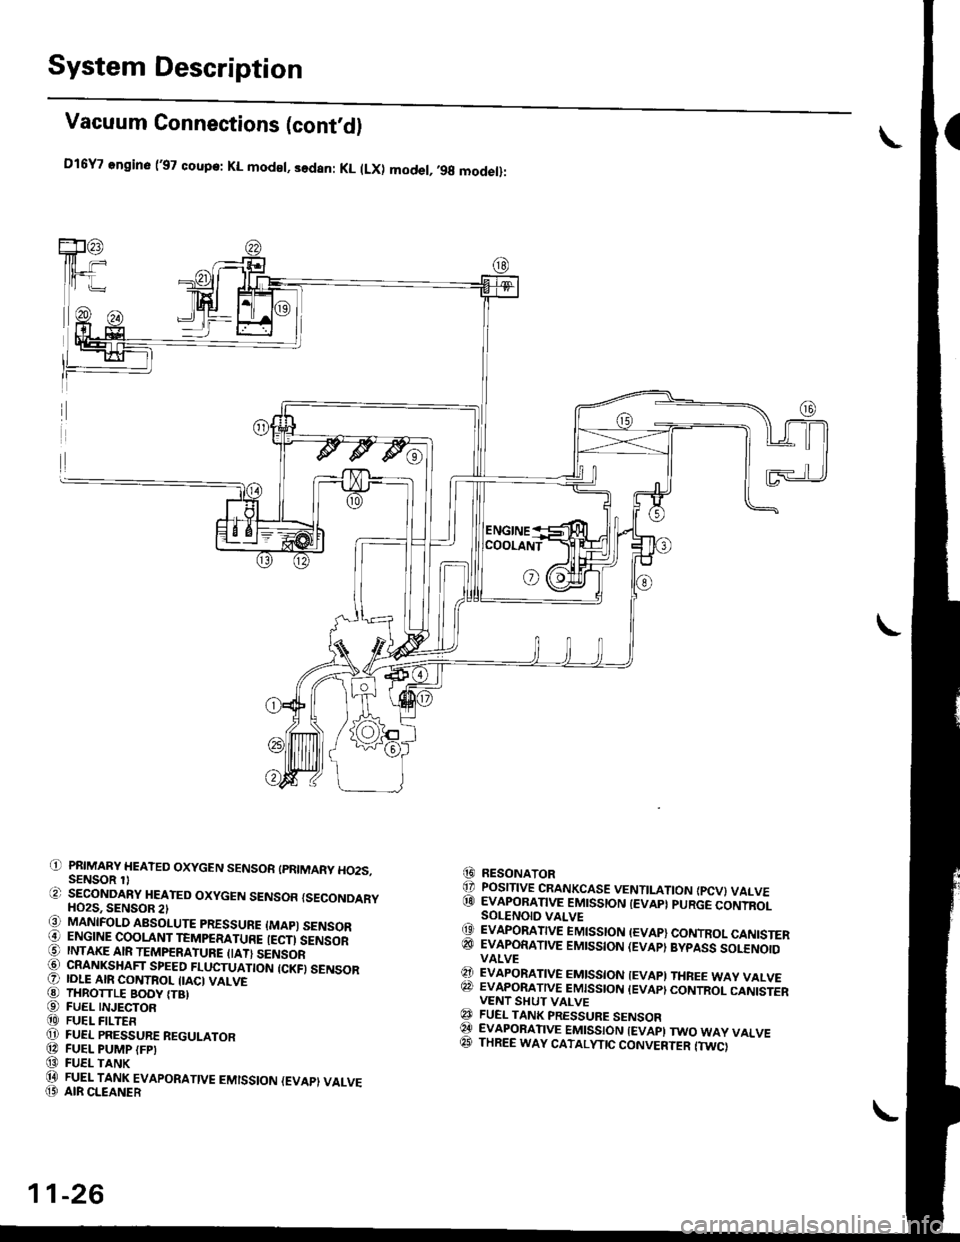 HONDA CIVIC 1999 6.G User Guide System Description
Vacuum Connections (contd)
Dl6Y7 angin6 (97 coup.: KL mod€l, sedan: KL (LX) model,,9g modet):
i1] PRIMARY HEATED OXYGEN SENSOR (PRIMARY HO2S,SENSOR 1)E) SECONDARY HEATED OXYGEN 